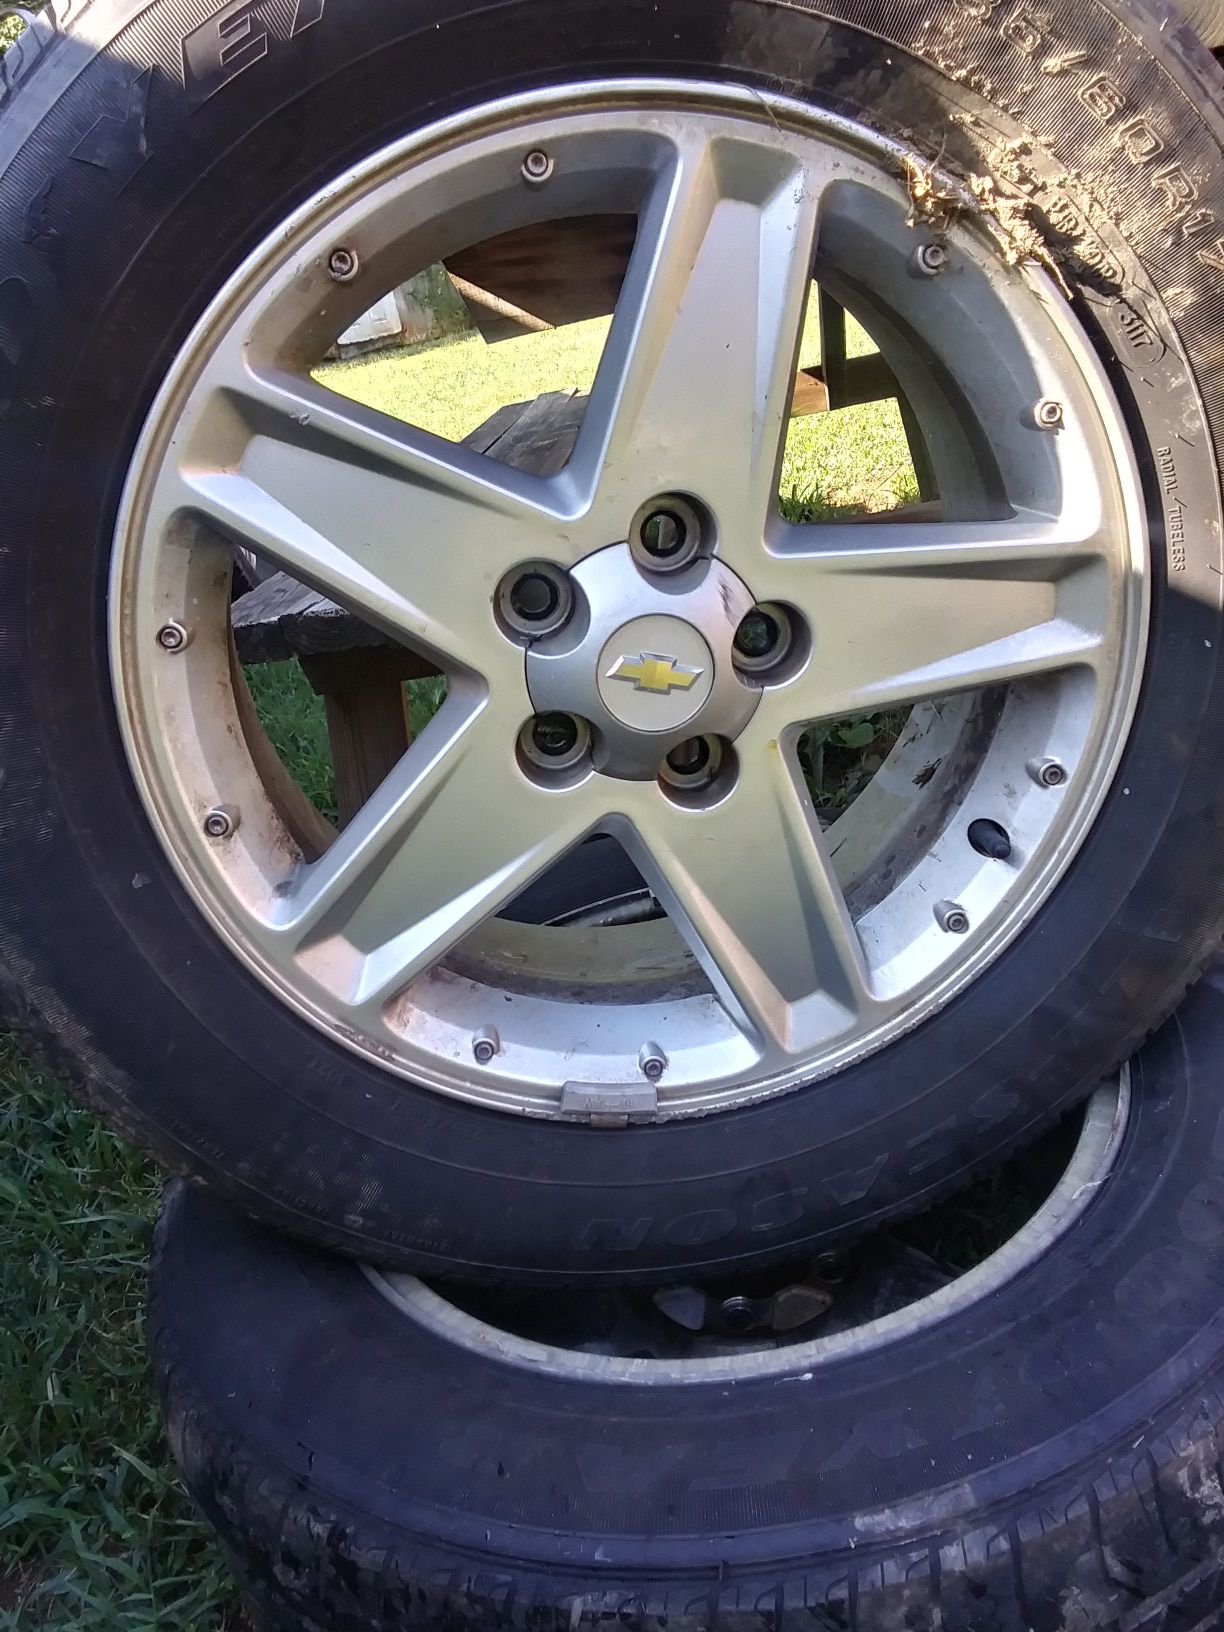 17" Chevy wheels